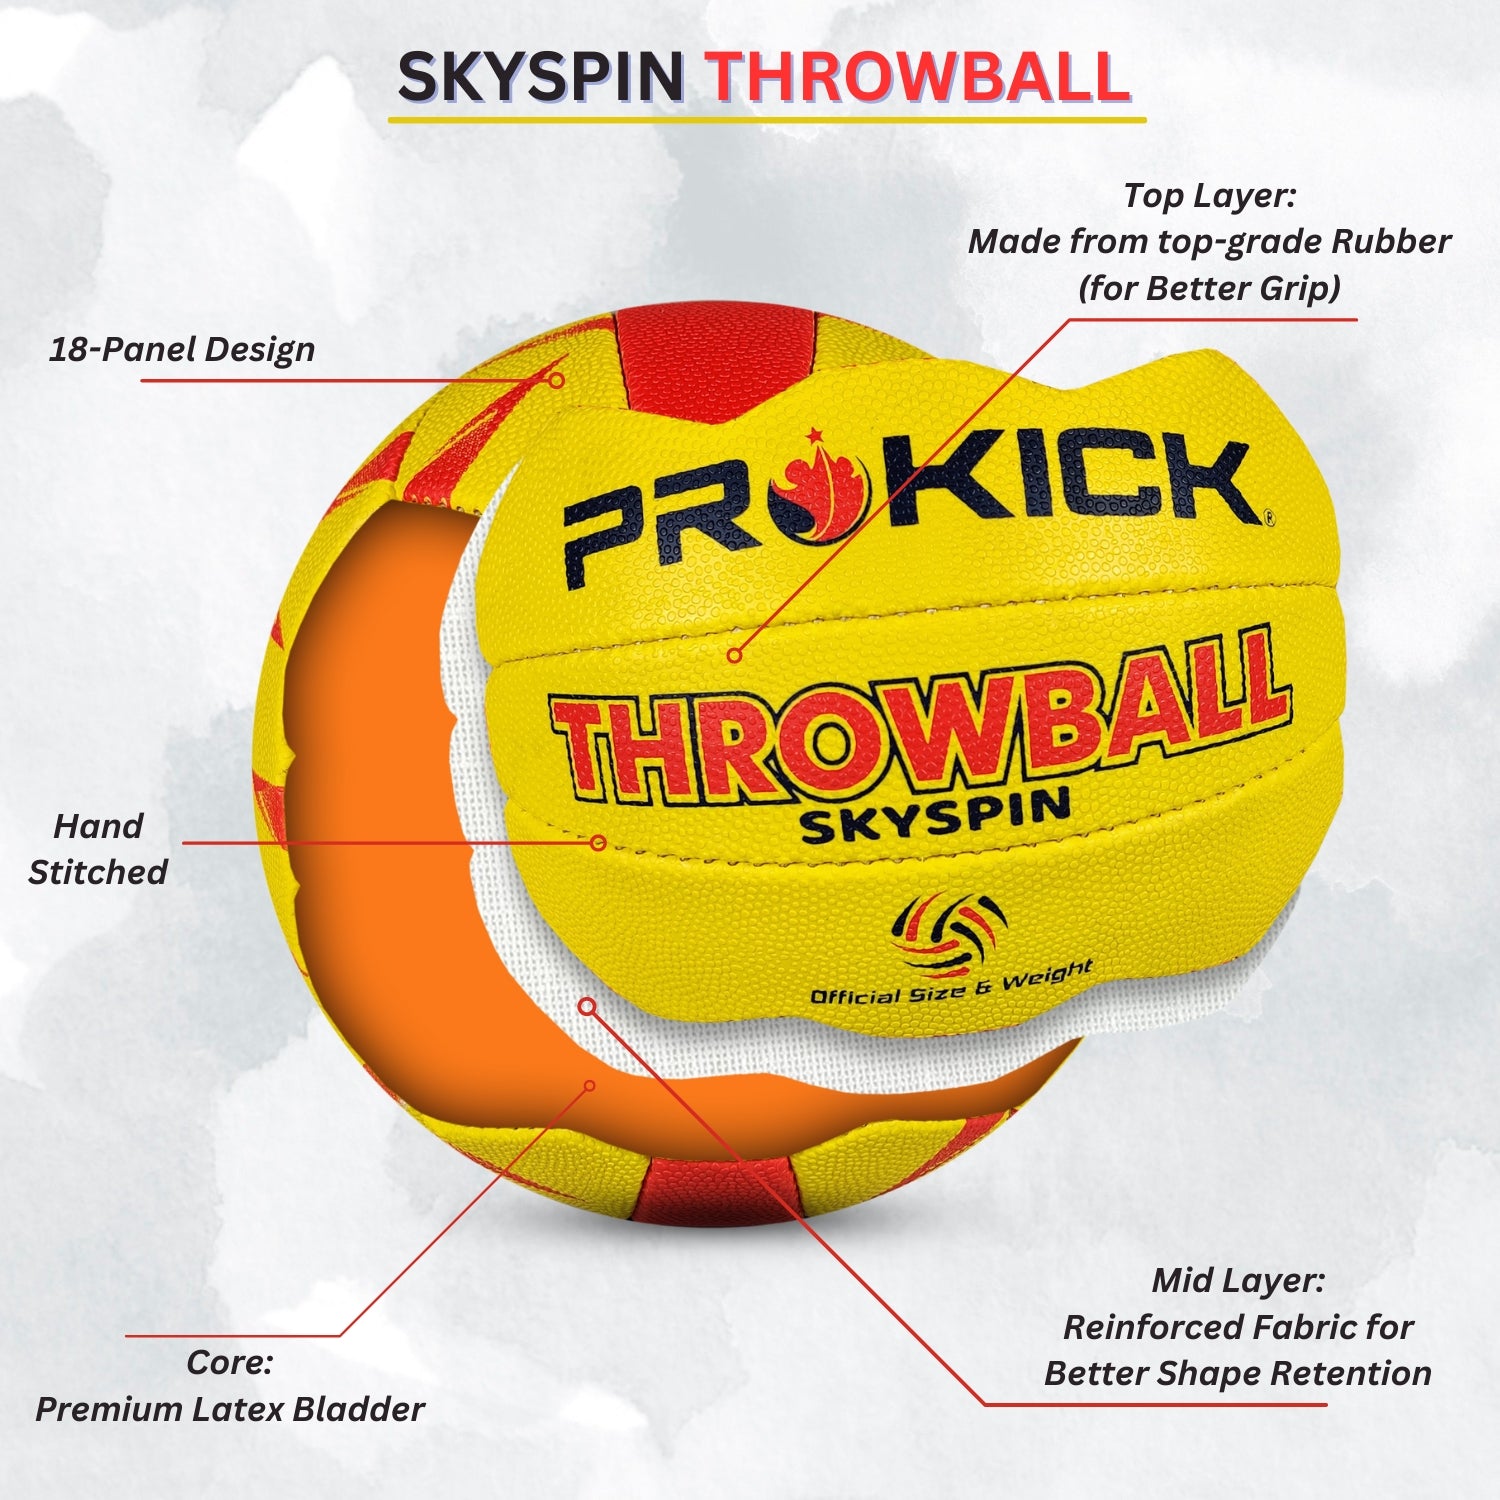 Prokick Skyspin Throwball, Yellow/Red - Size 5 (Indoor-Outdoor) - Best Price online Prokicksports.com